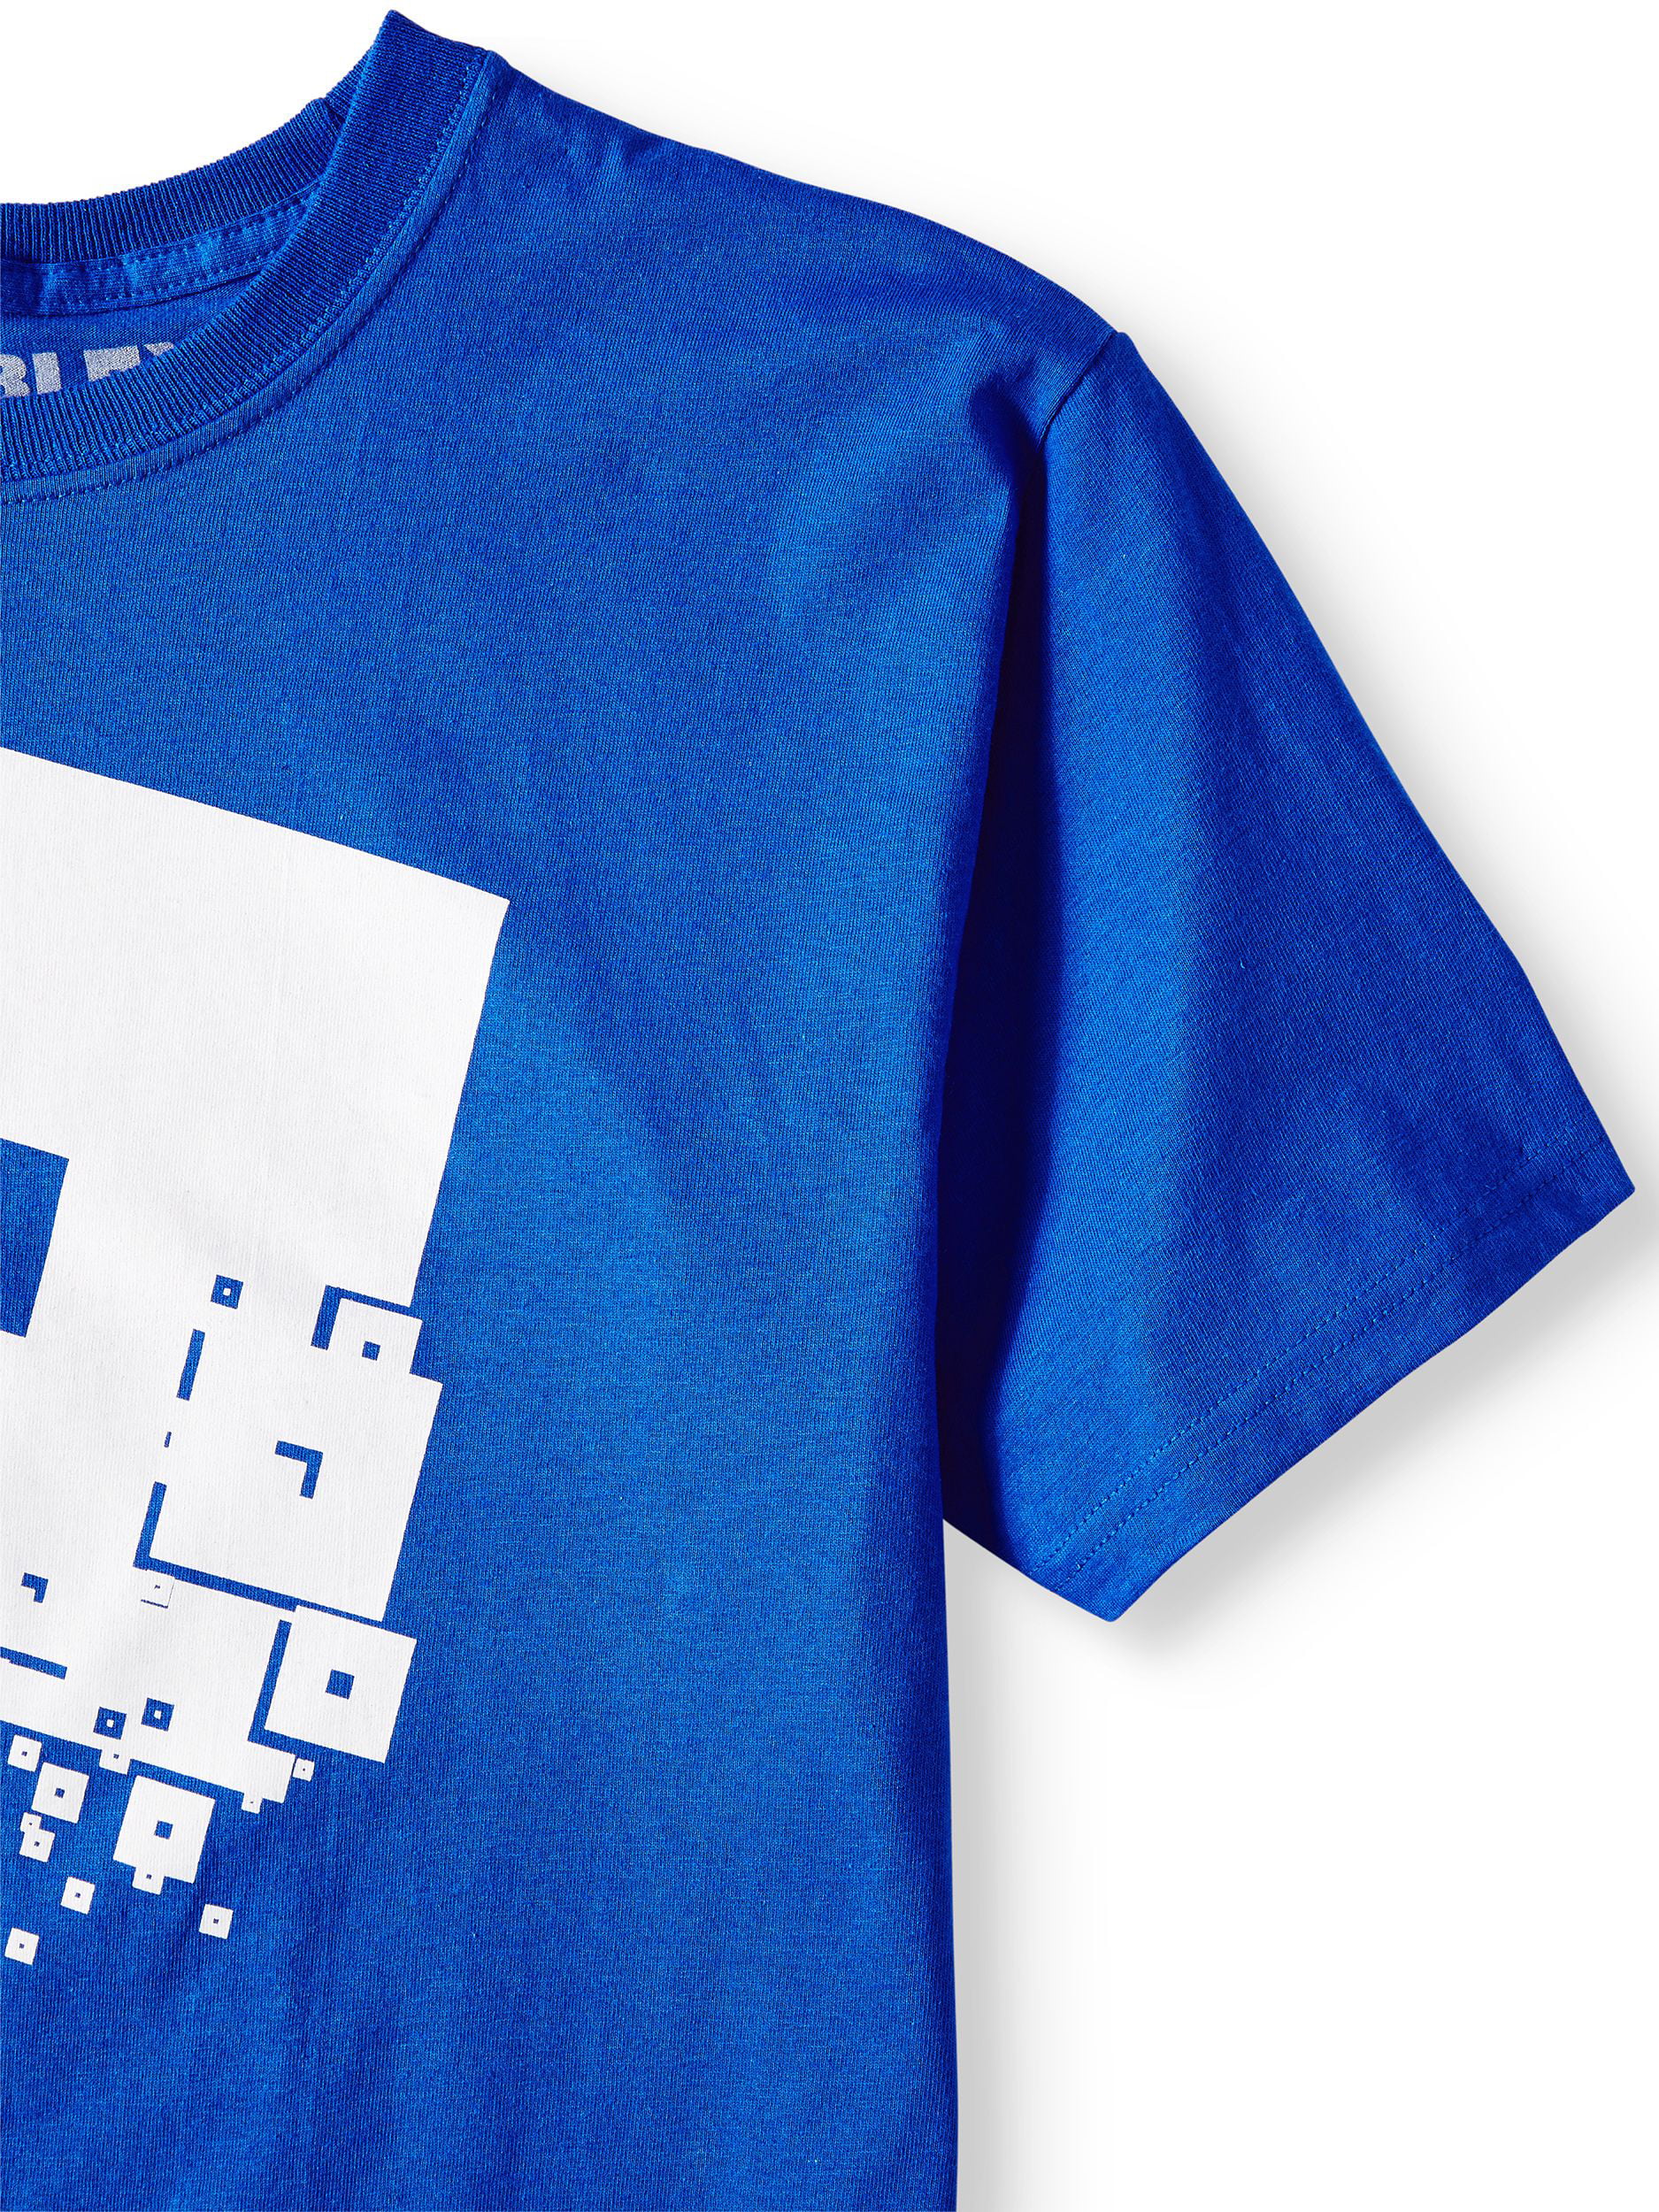 Roblox Short Sleeve Graphic T-shirts, 2-Pack Set (Little Boys & Big Boys)